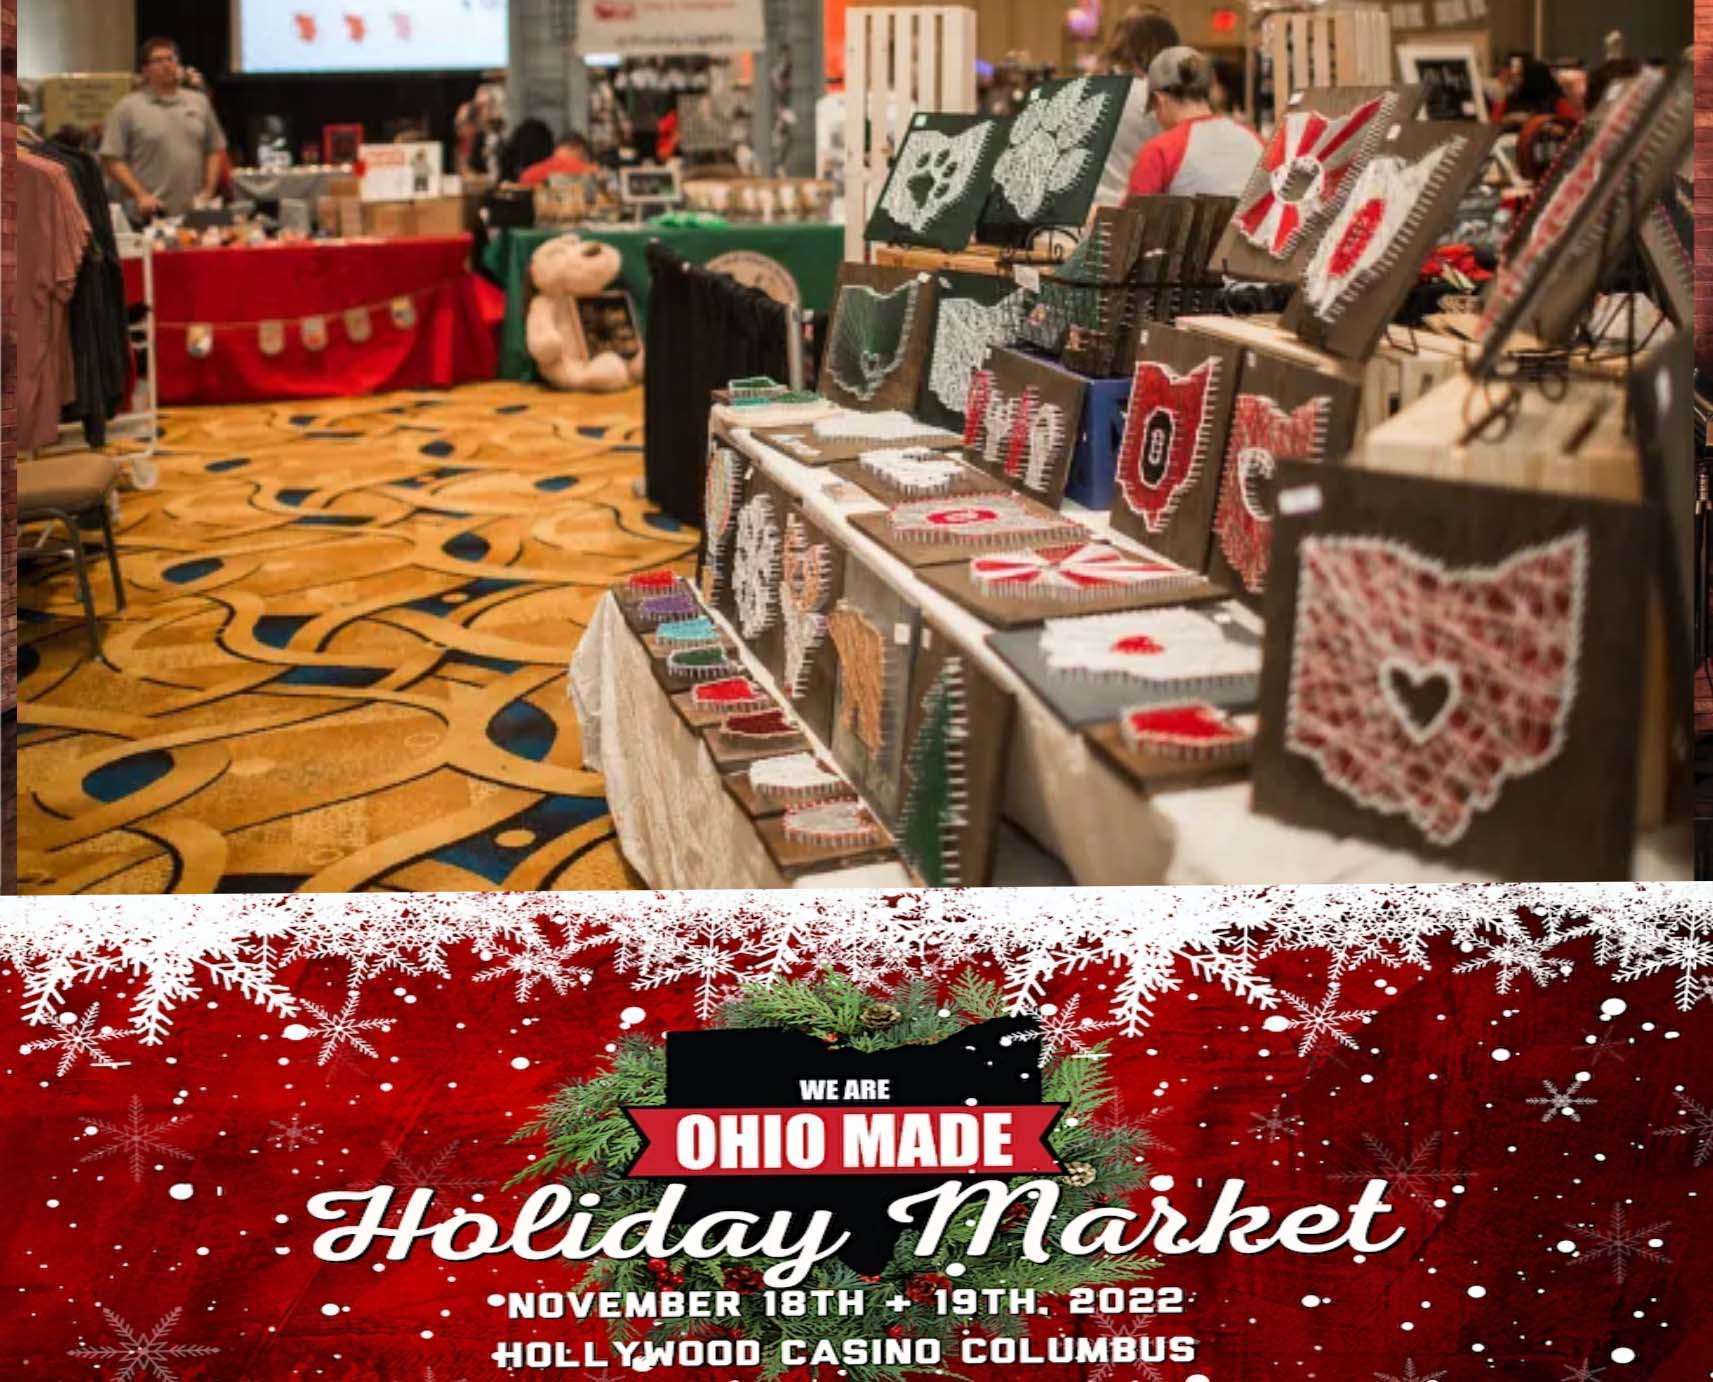 Ohio Made Holiday Market